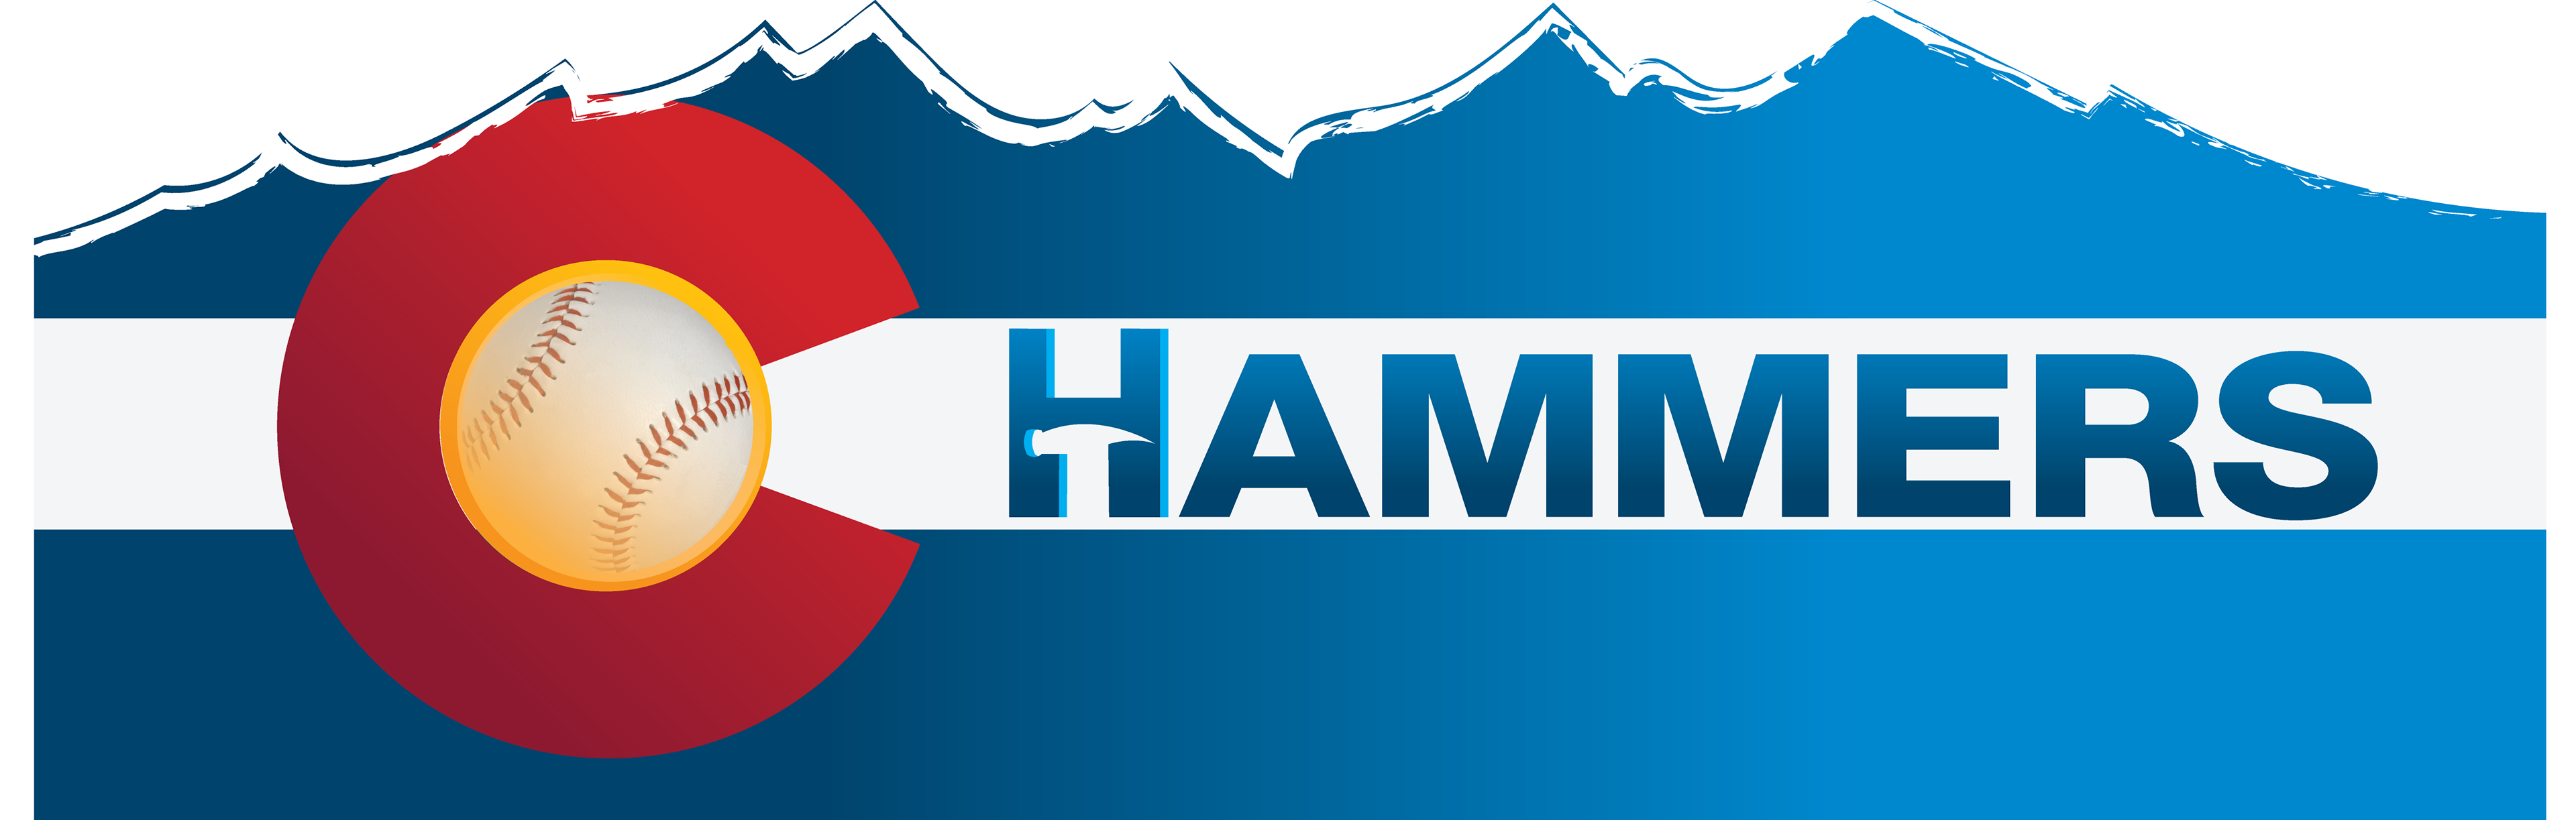 Download Hammers Colorado Flag Logo Spandoek PNG Image with No